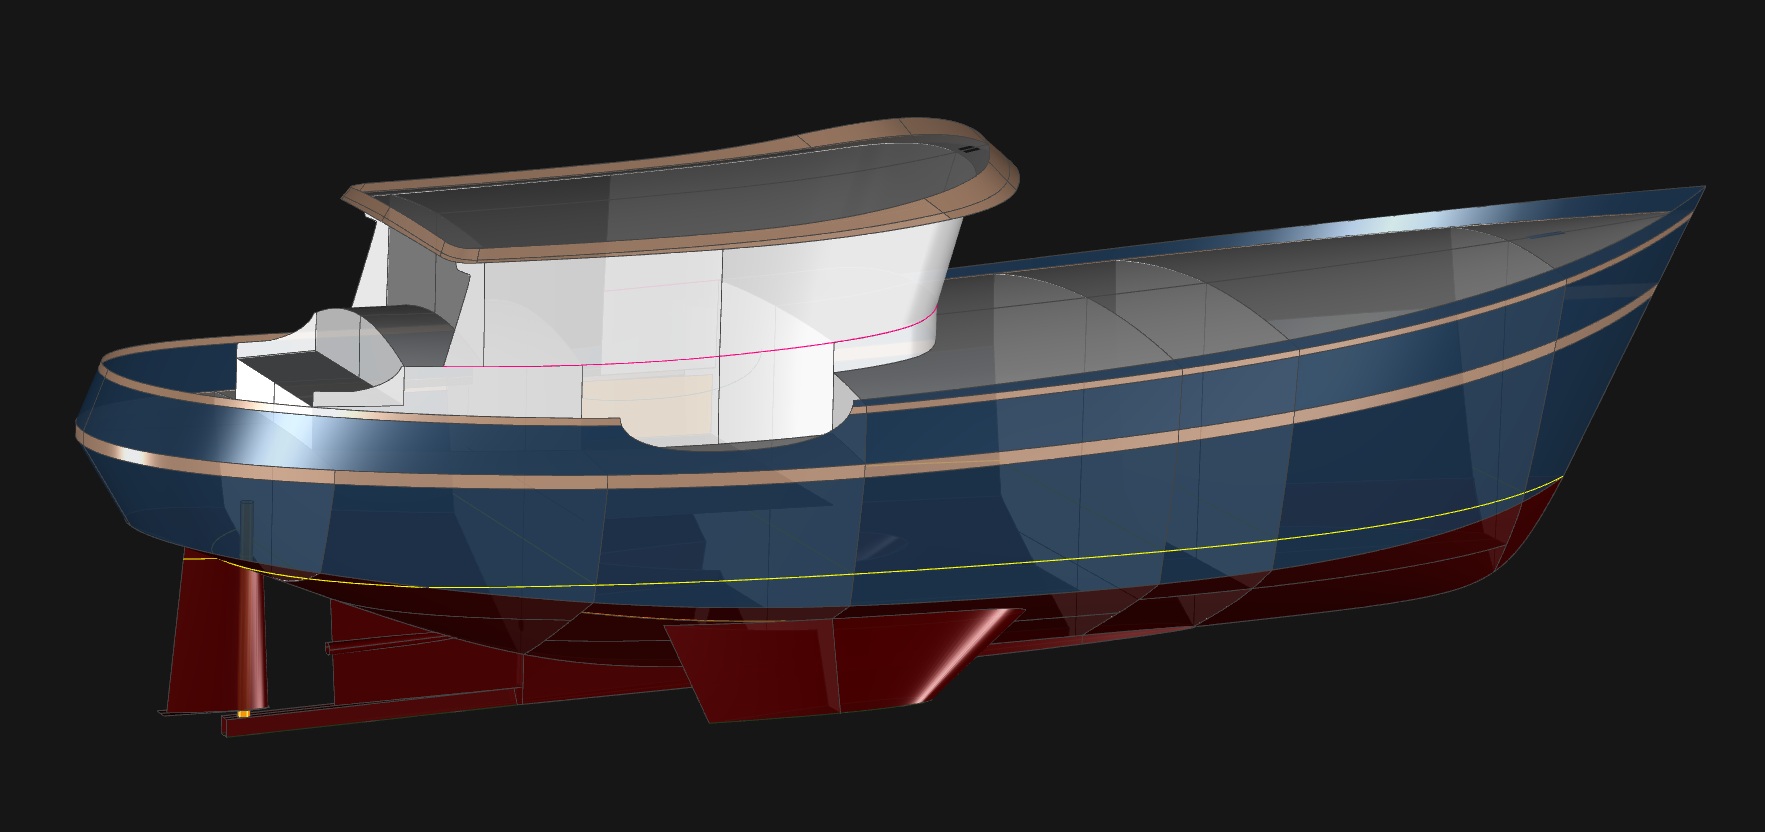 Far Horizon 46 - A Trawler Yacht by Kasten Marine Design, Inc.